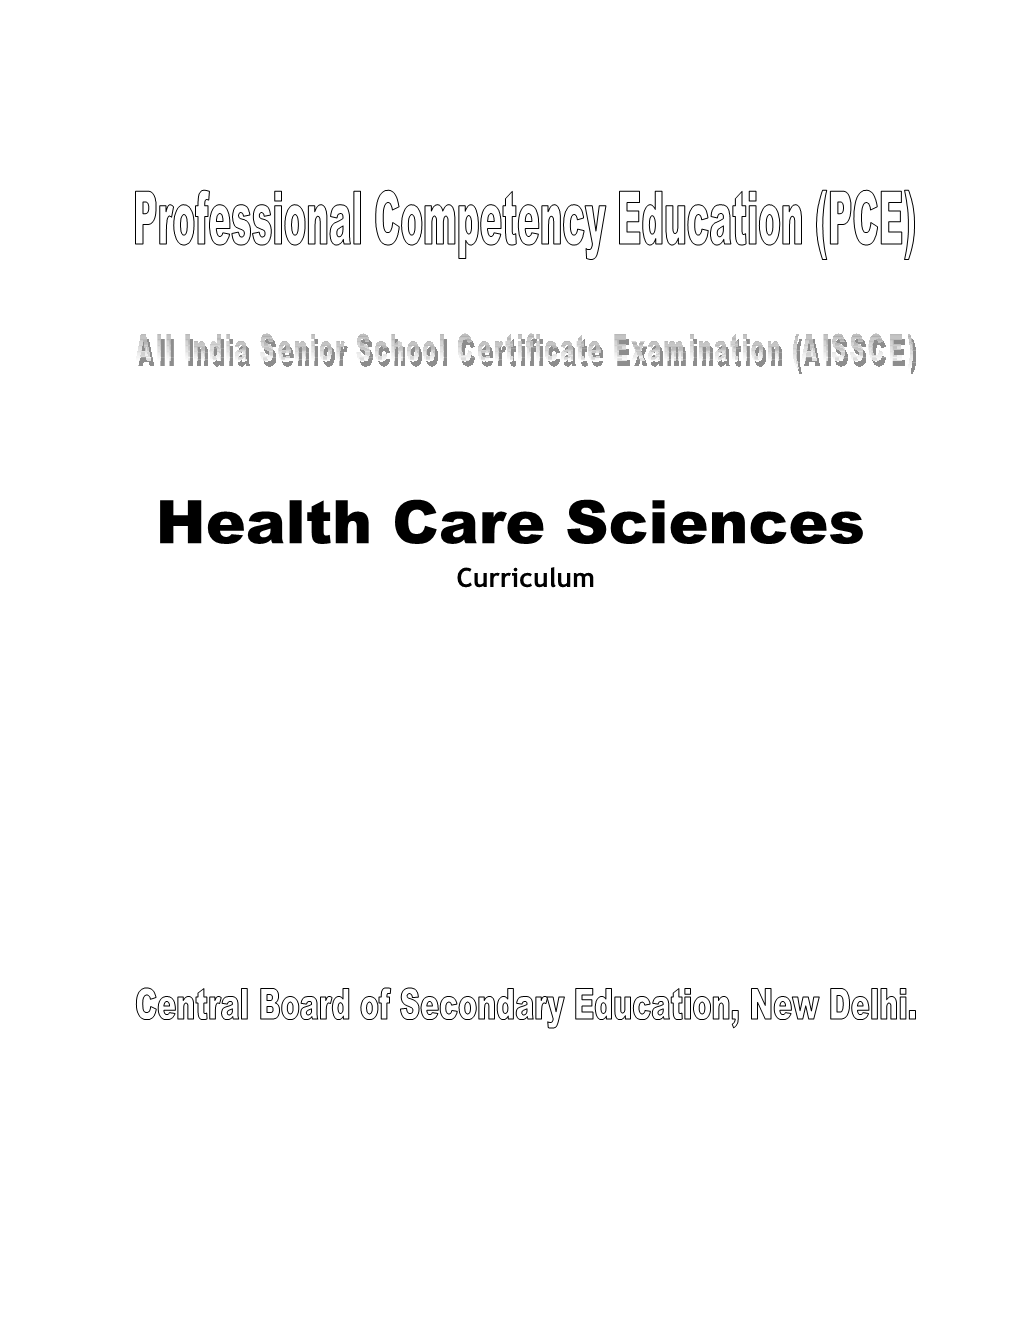 Health Care Sciences